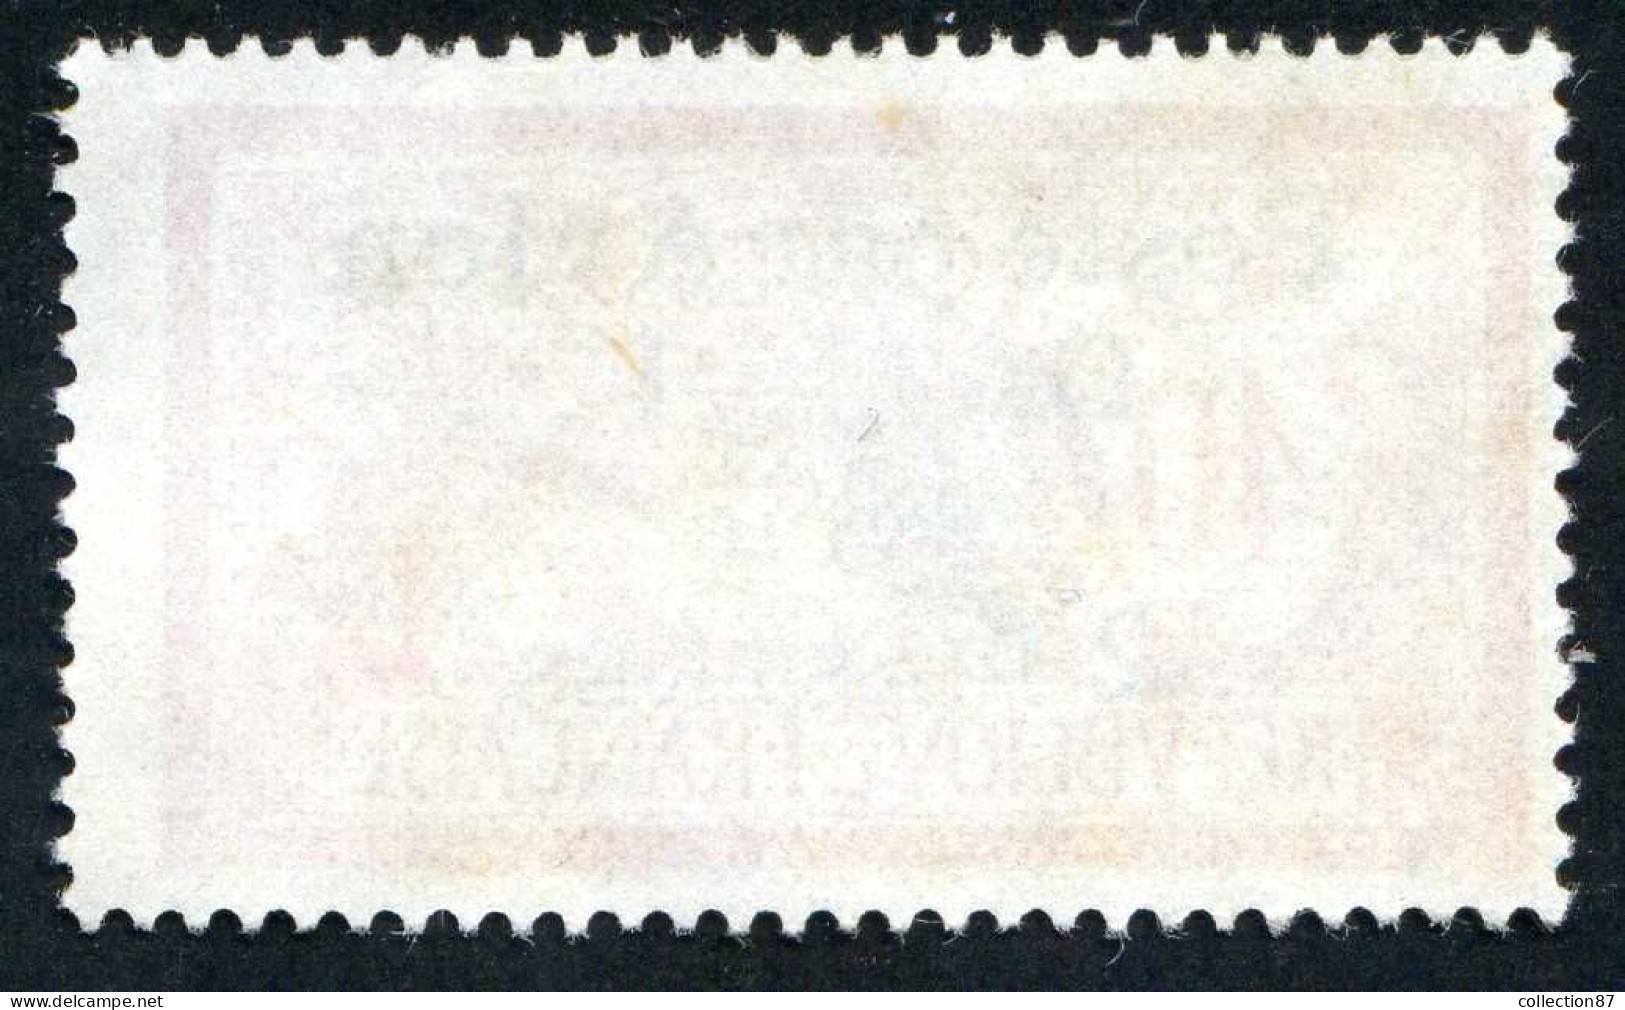 REF 086 > SYRIE < PA N° 10 > Ø < Oblitéré < Ø Used > Poste Aérienne - Aéro - Air Mail - Luftpost